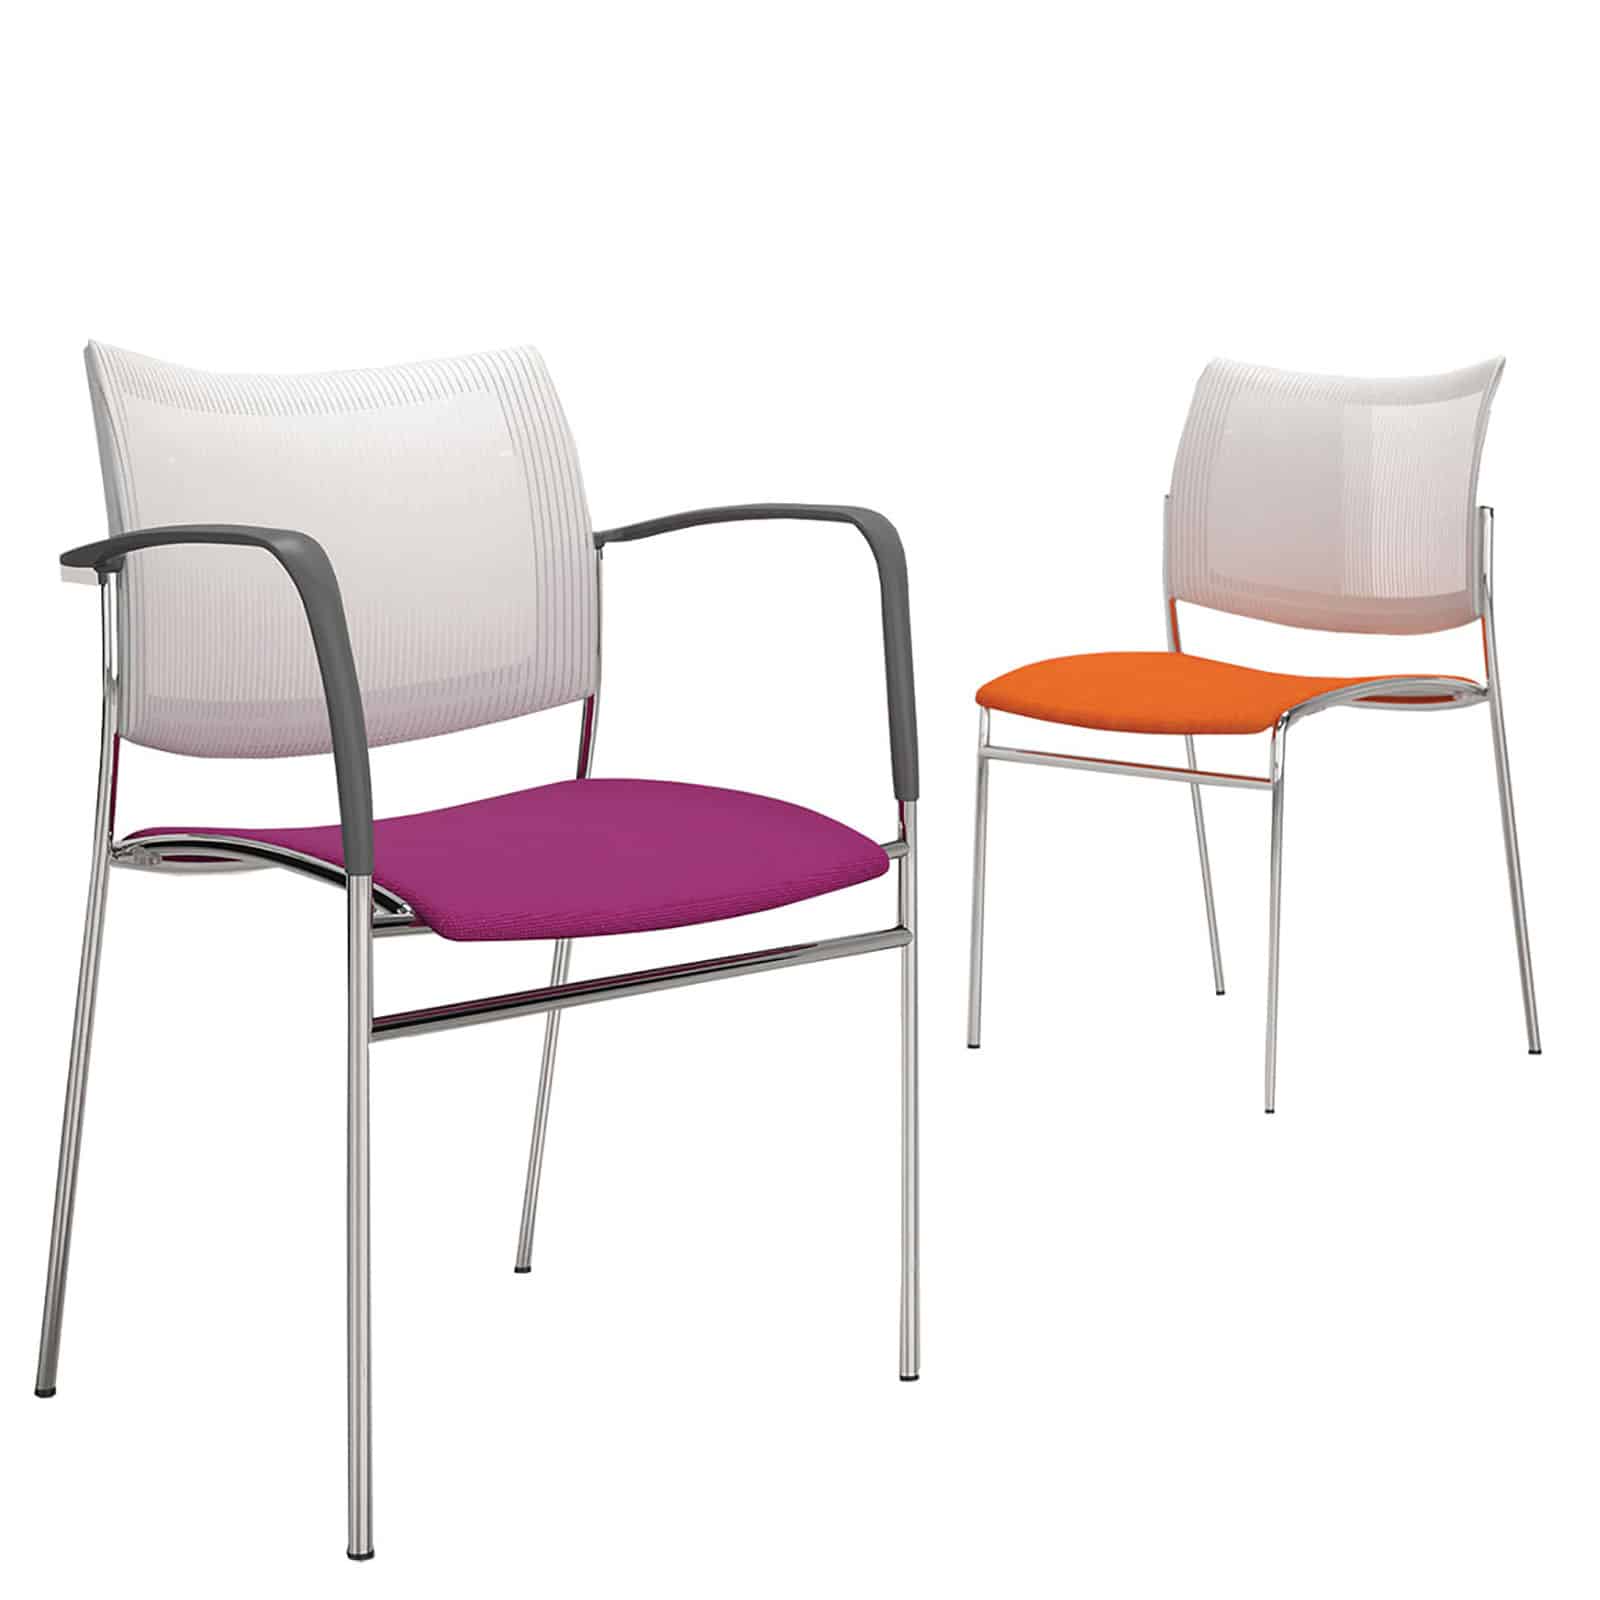 Krug Mobi Series Multi Purpose Chairs